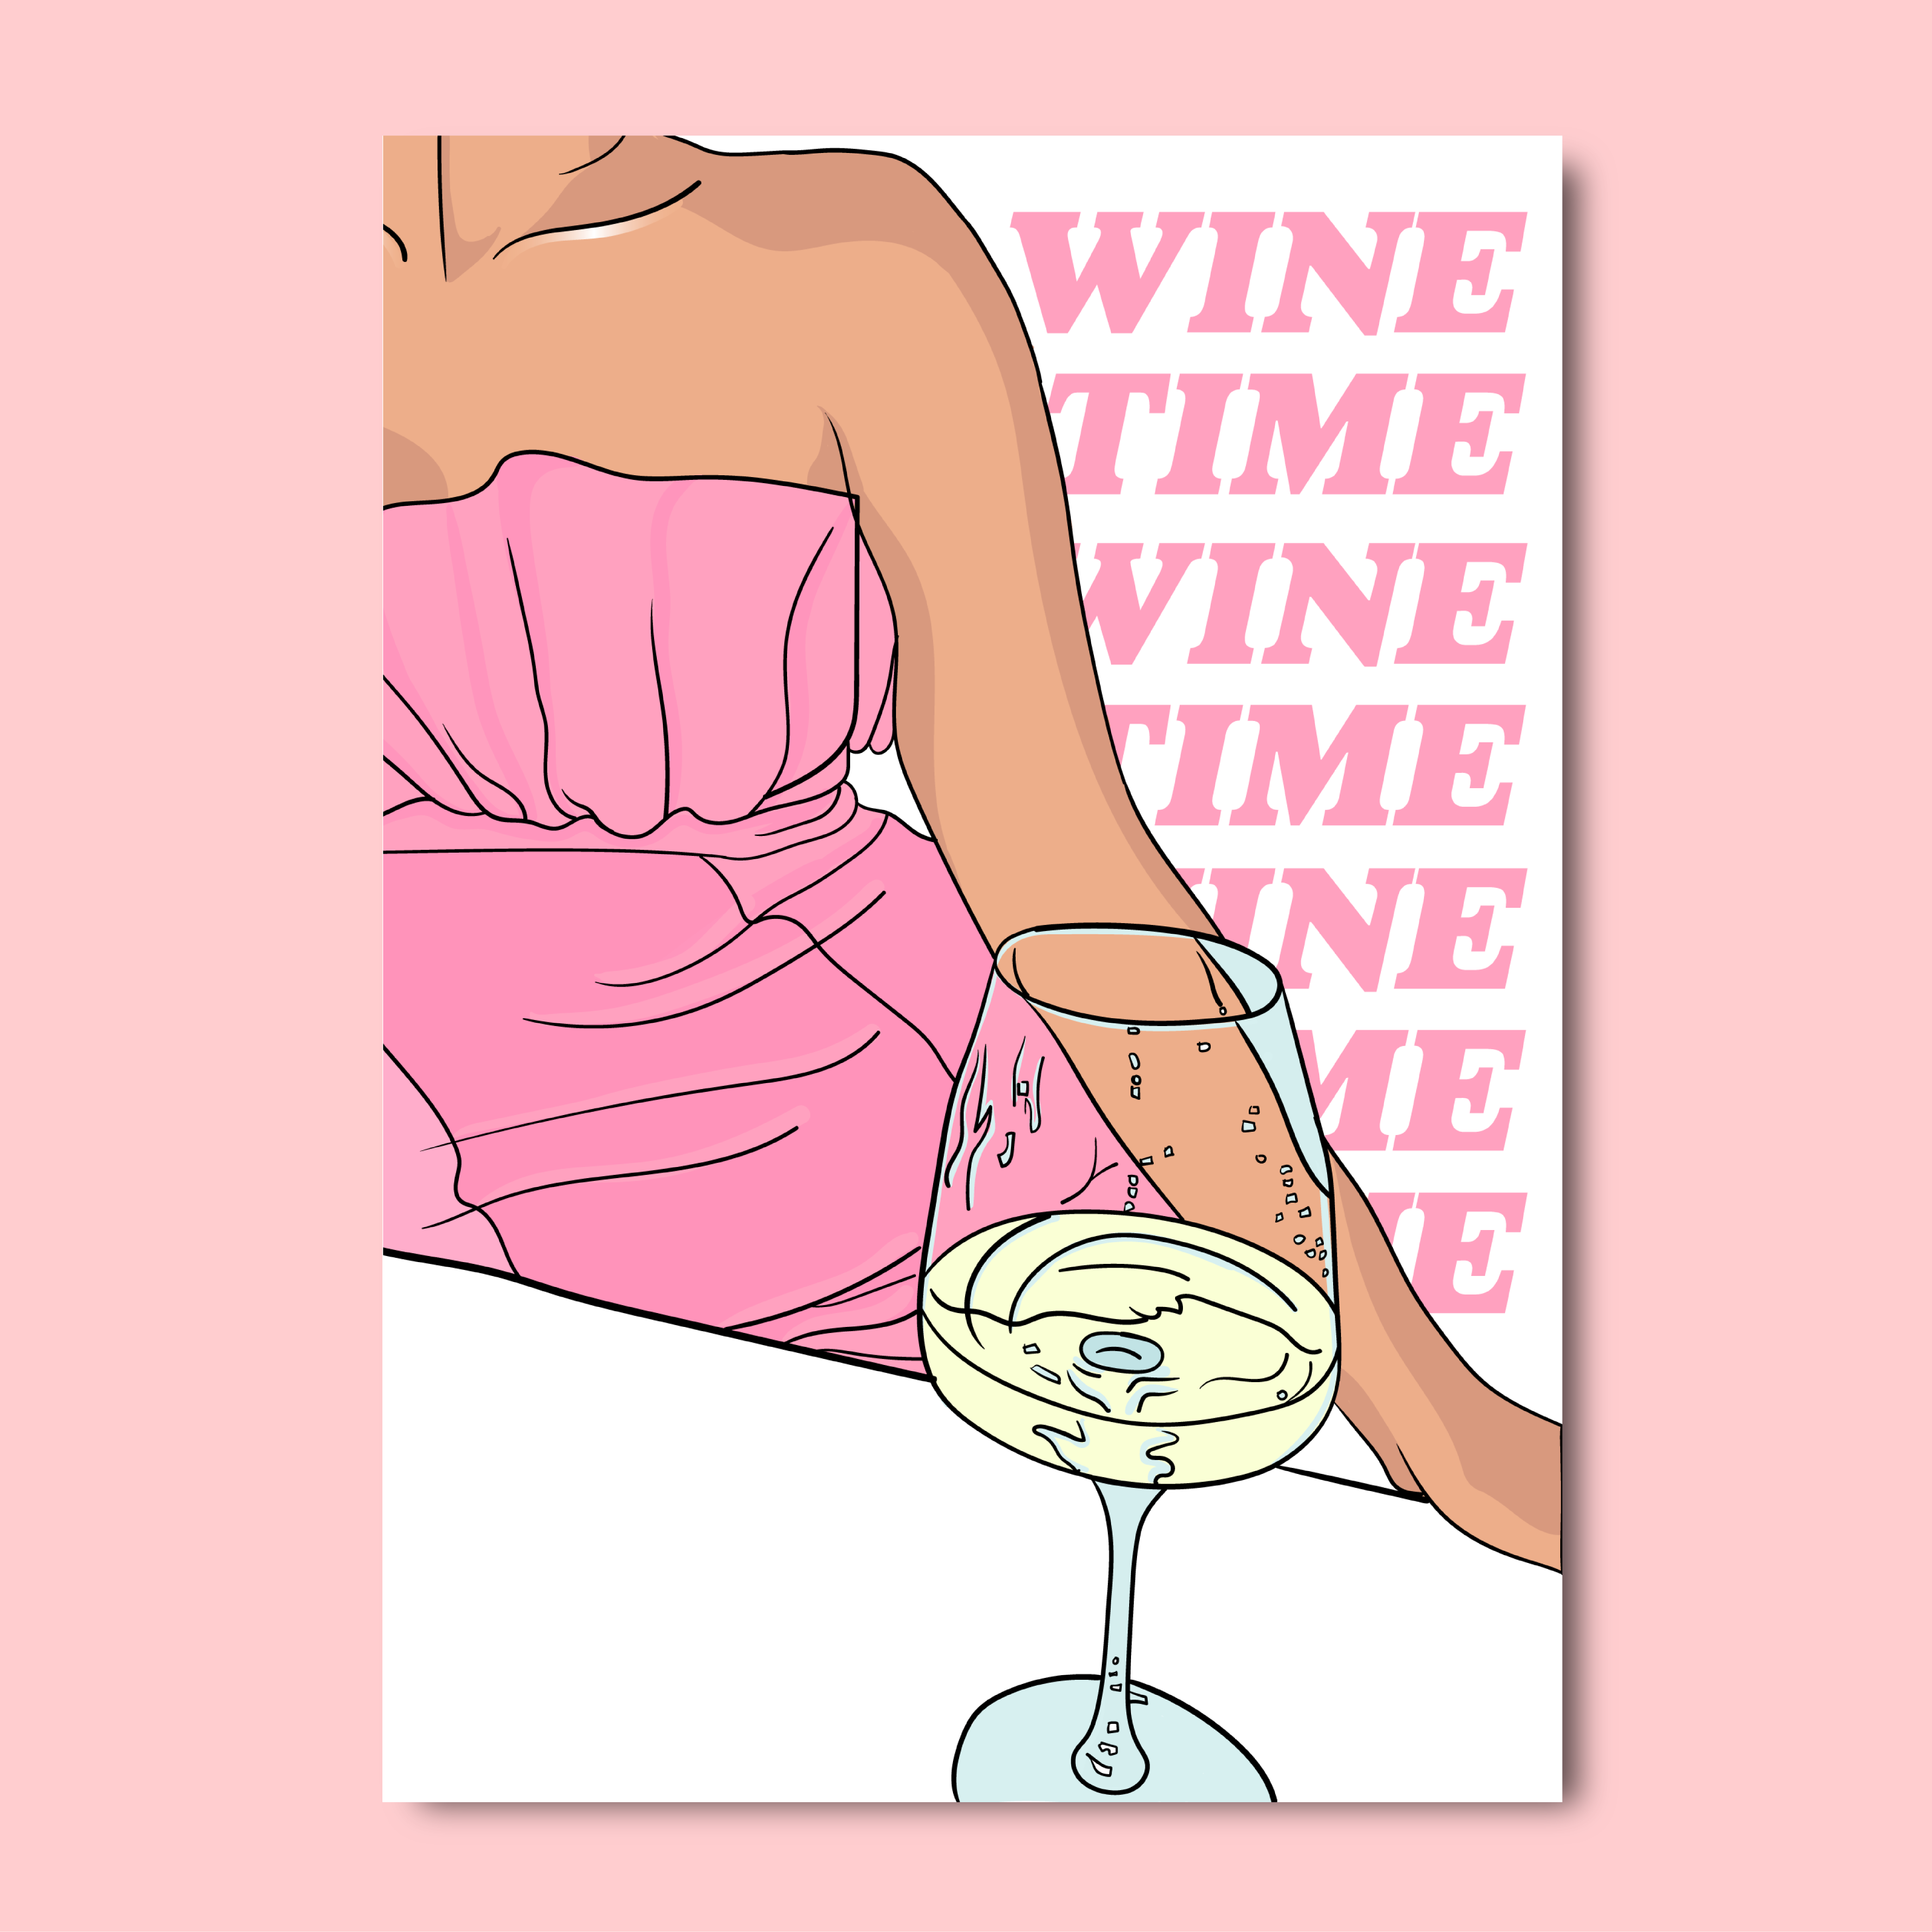 Wine time